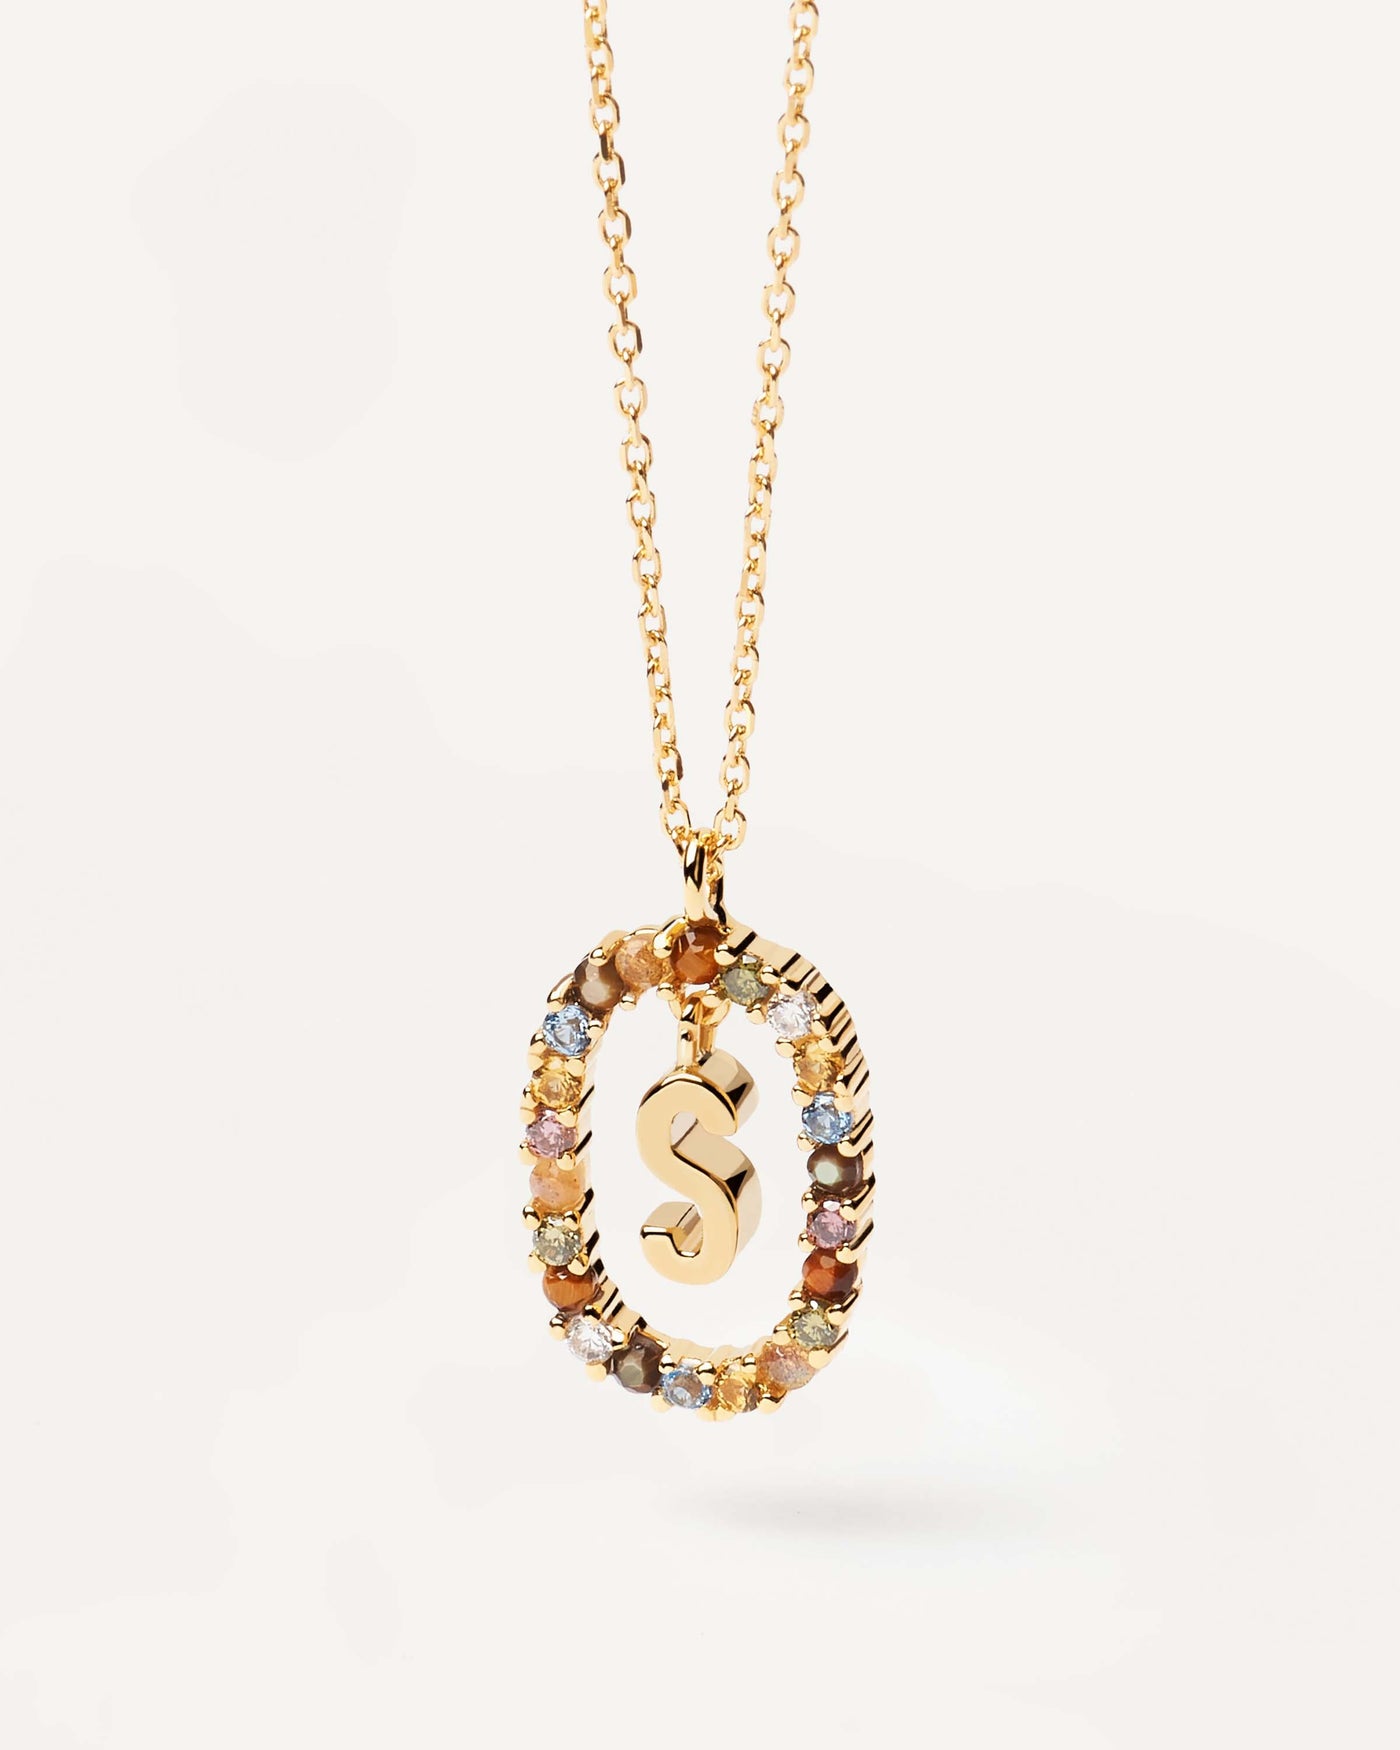 Letter S necklace - 925 sterling silver / 18K gold plating